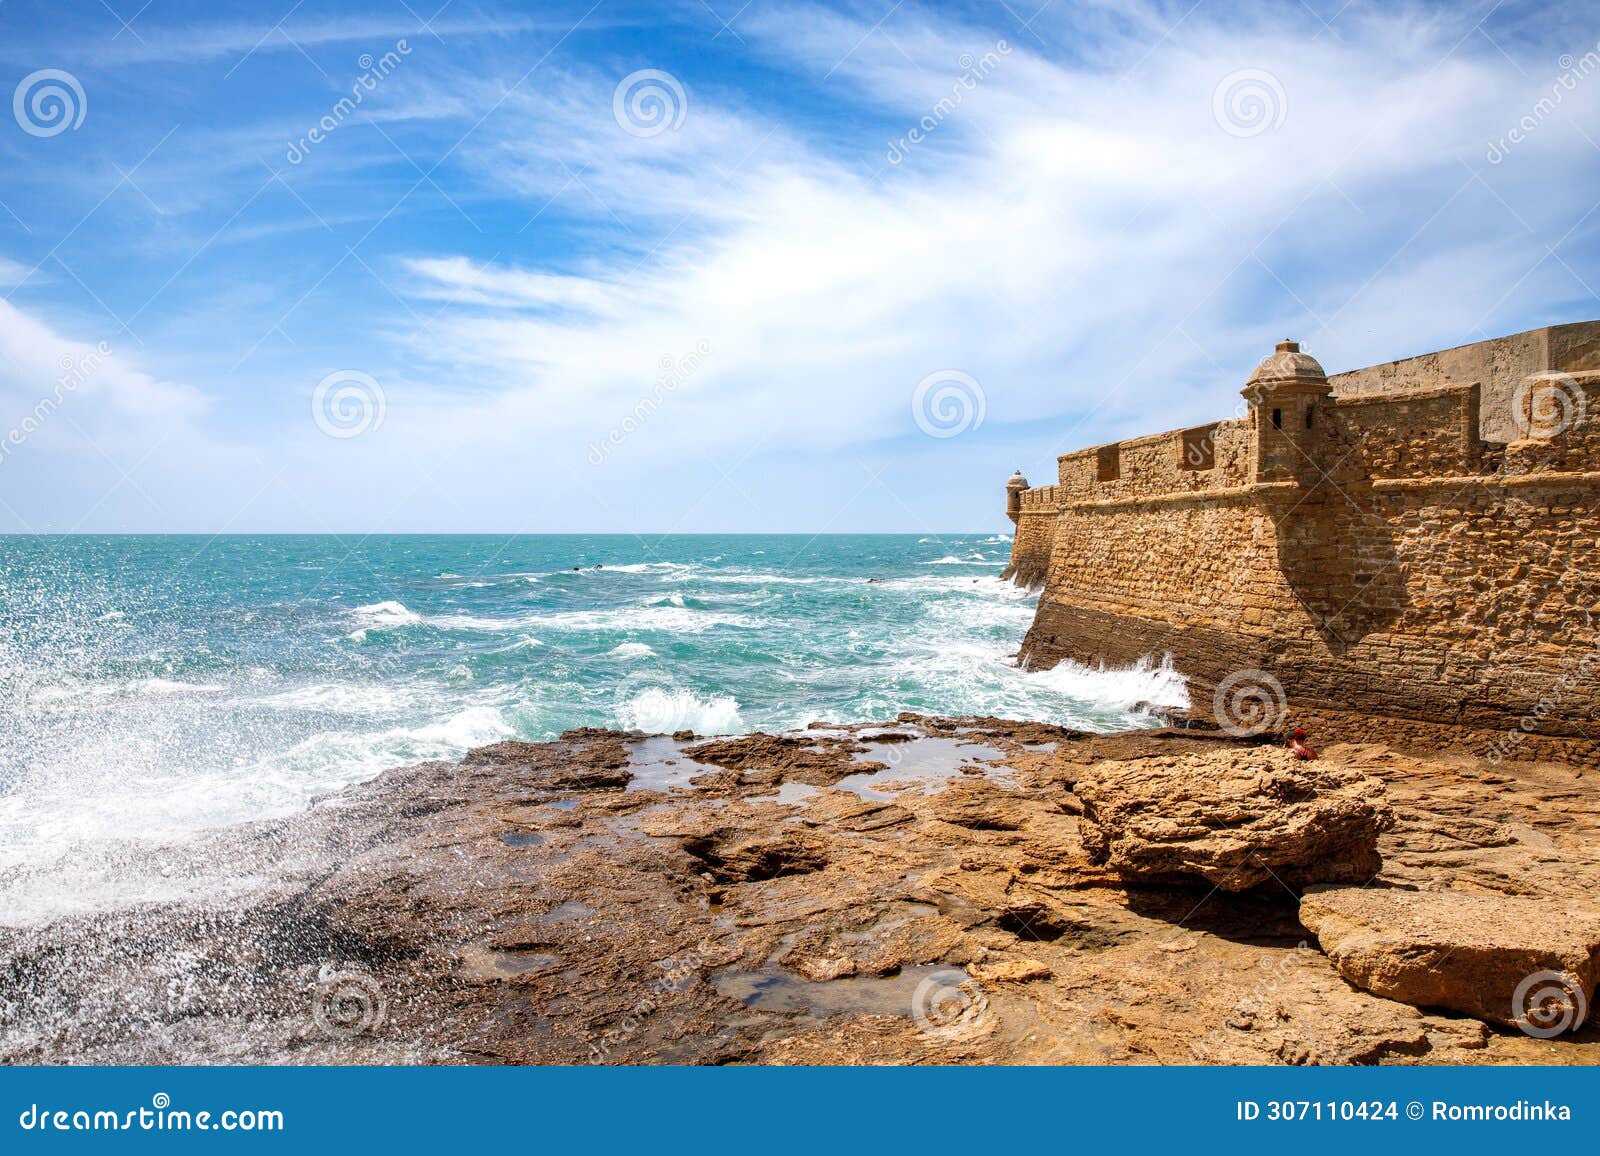 la caleta beach, balneario de la palma building and castle of san sebastian at sunset - cadiz, andalusia, spain